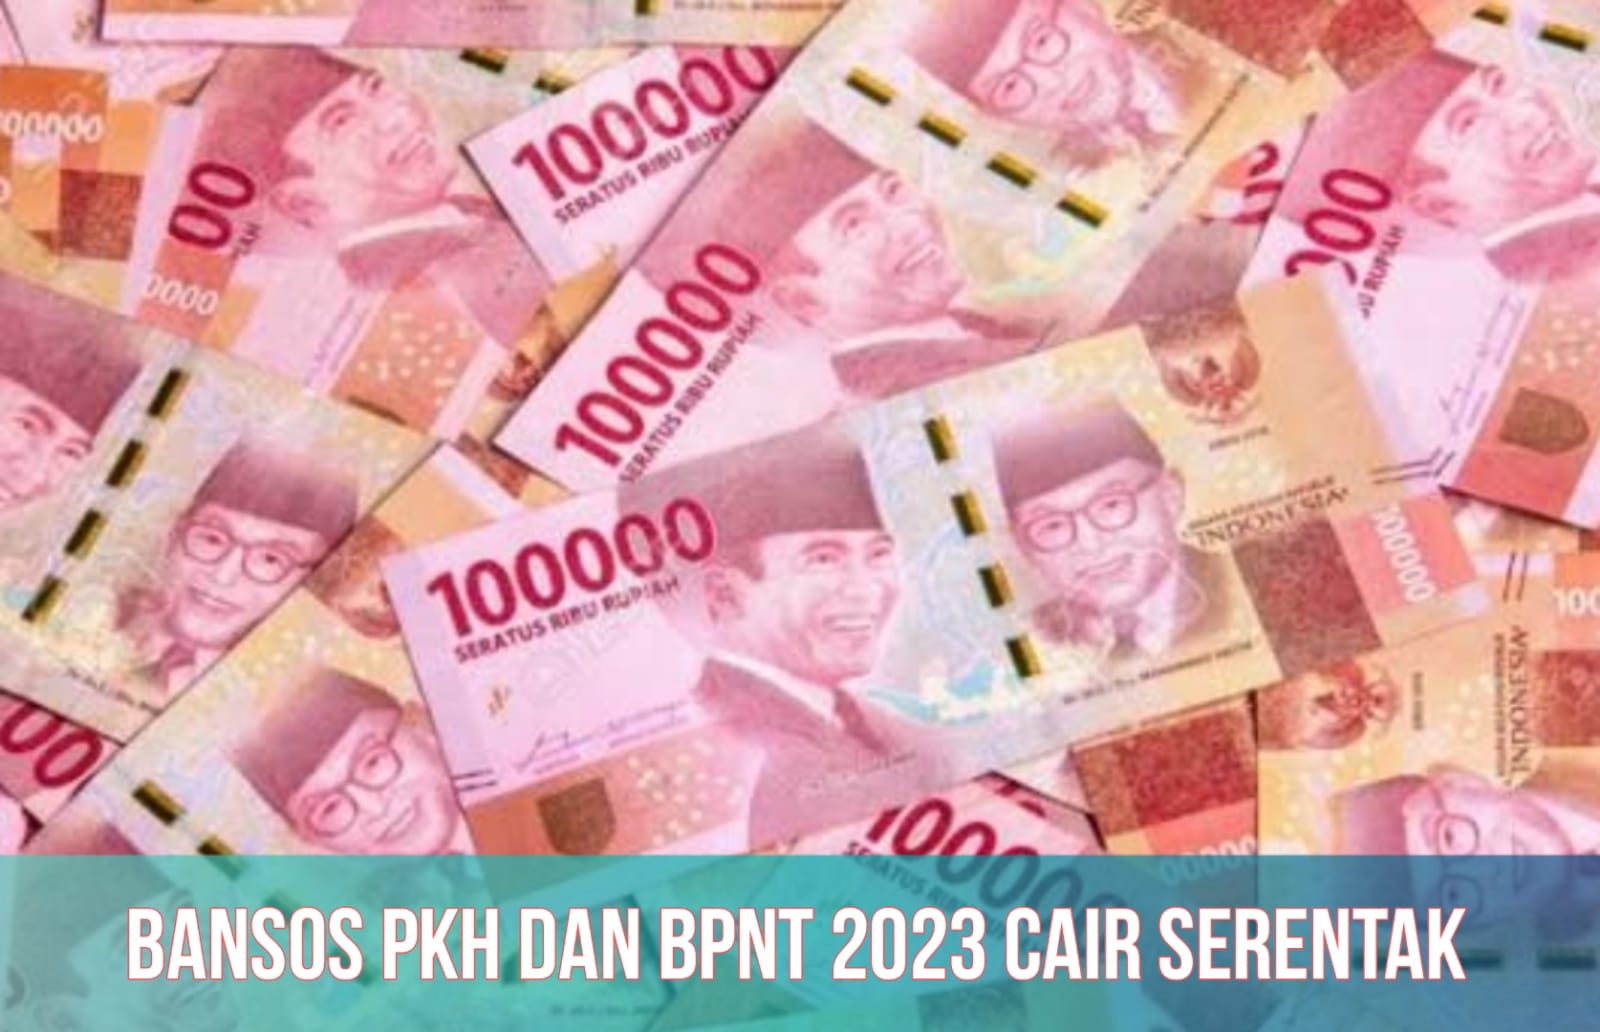 Bansos PKH dan BPNT Cair Serentak Akhir Agustus 2023, Segera Cek Penerima di cekbansos.kemensos.go.id